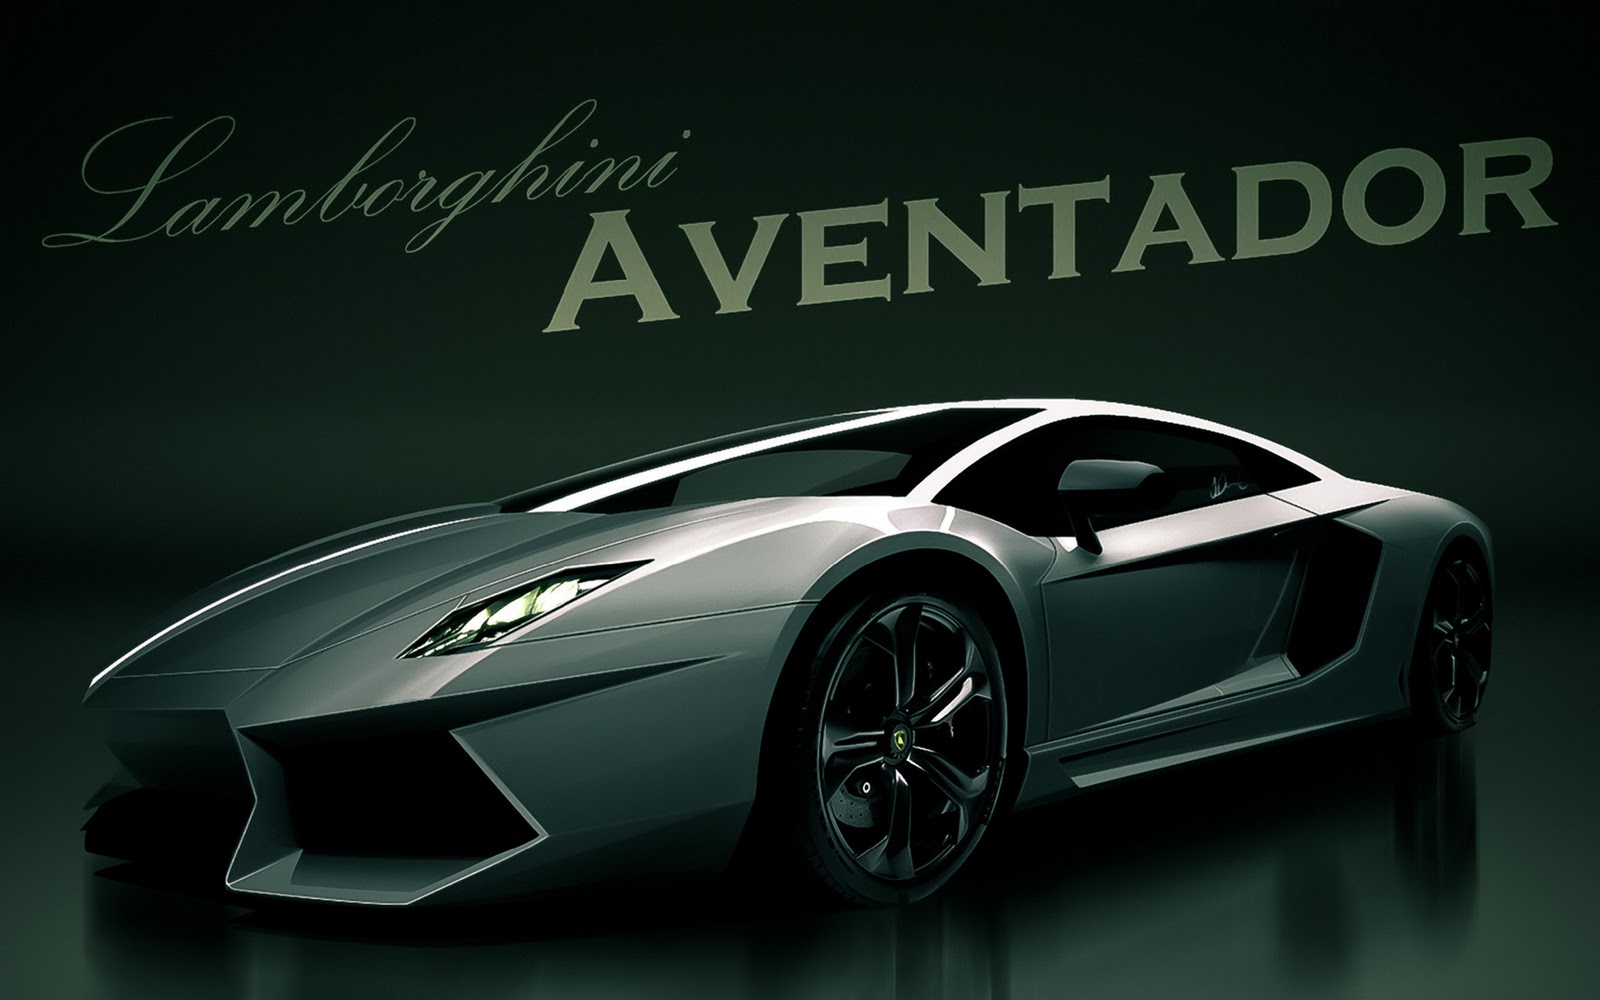 Lamborghini Aventador Gold Image Re Ebooks